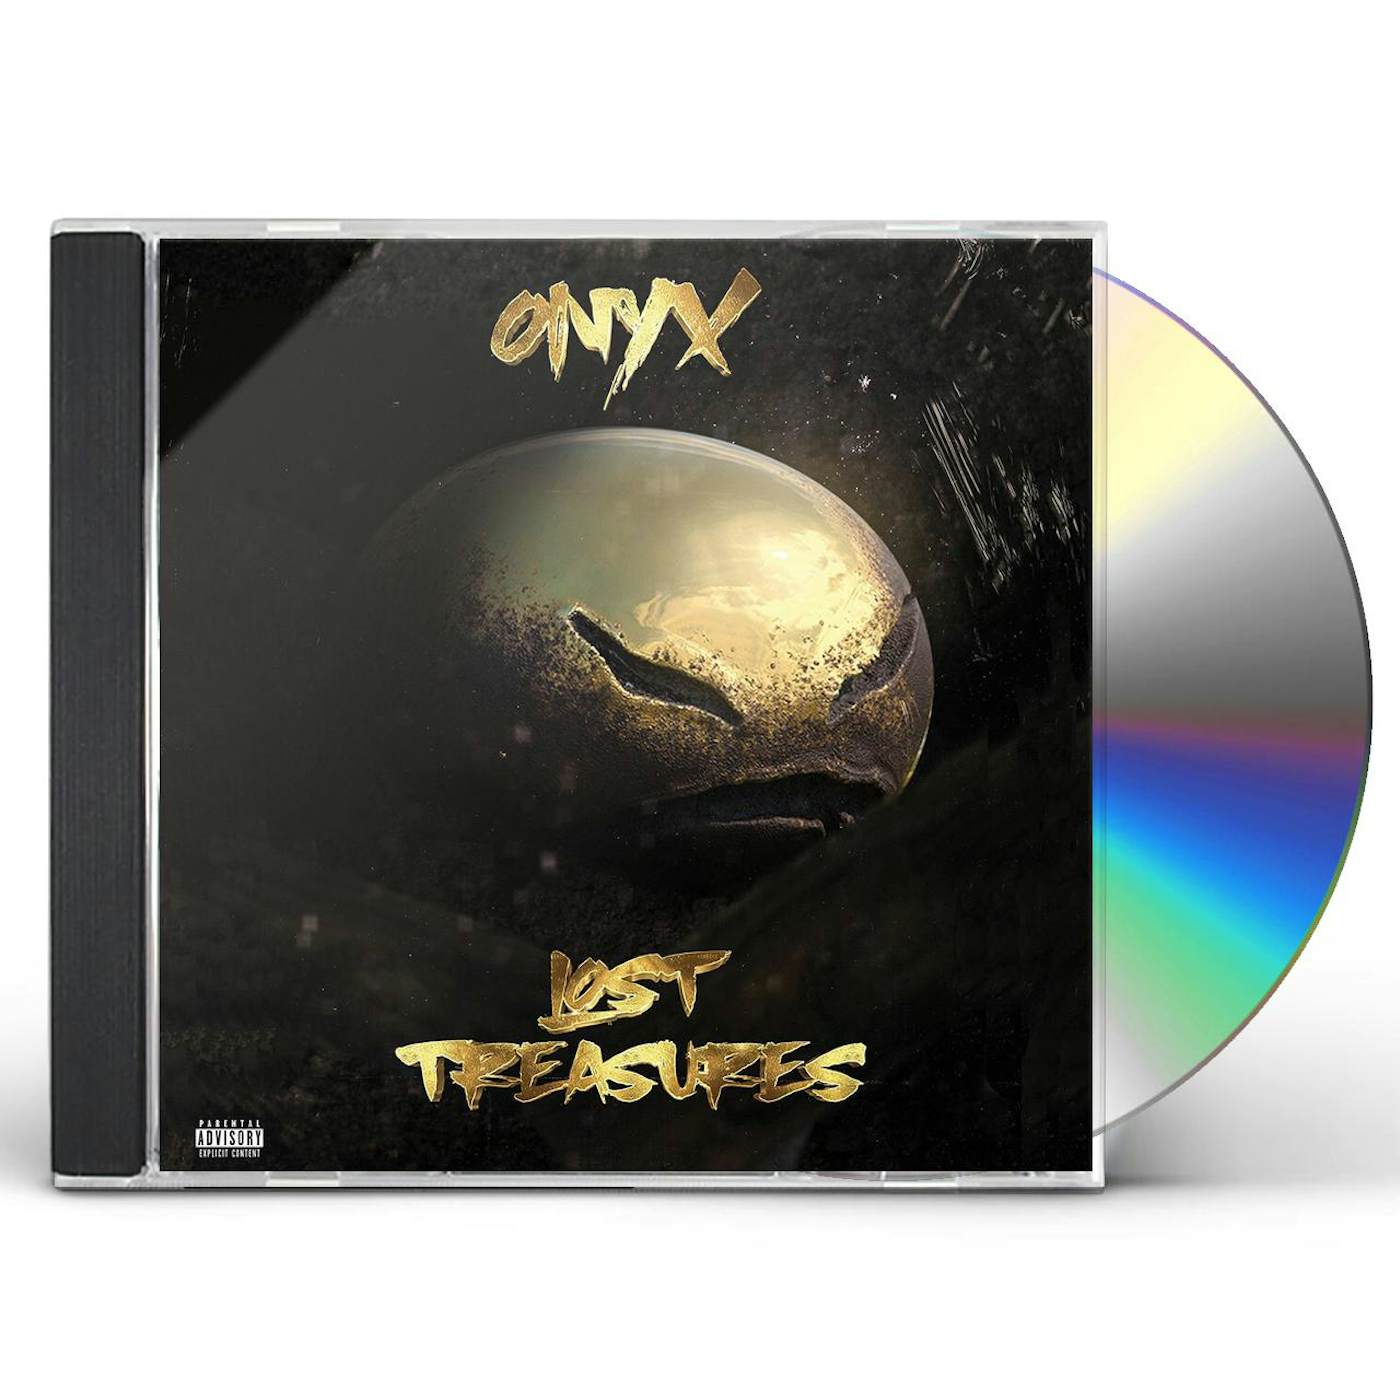 Onyx LOST TREASURES CD